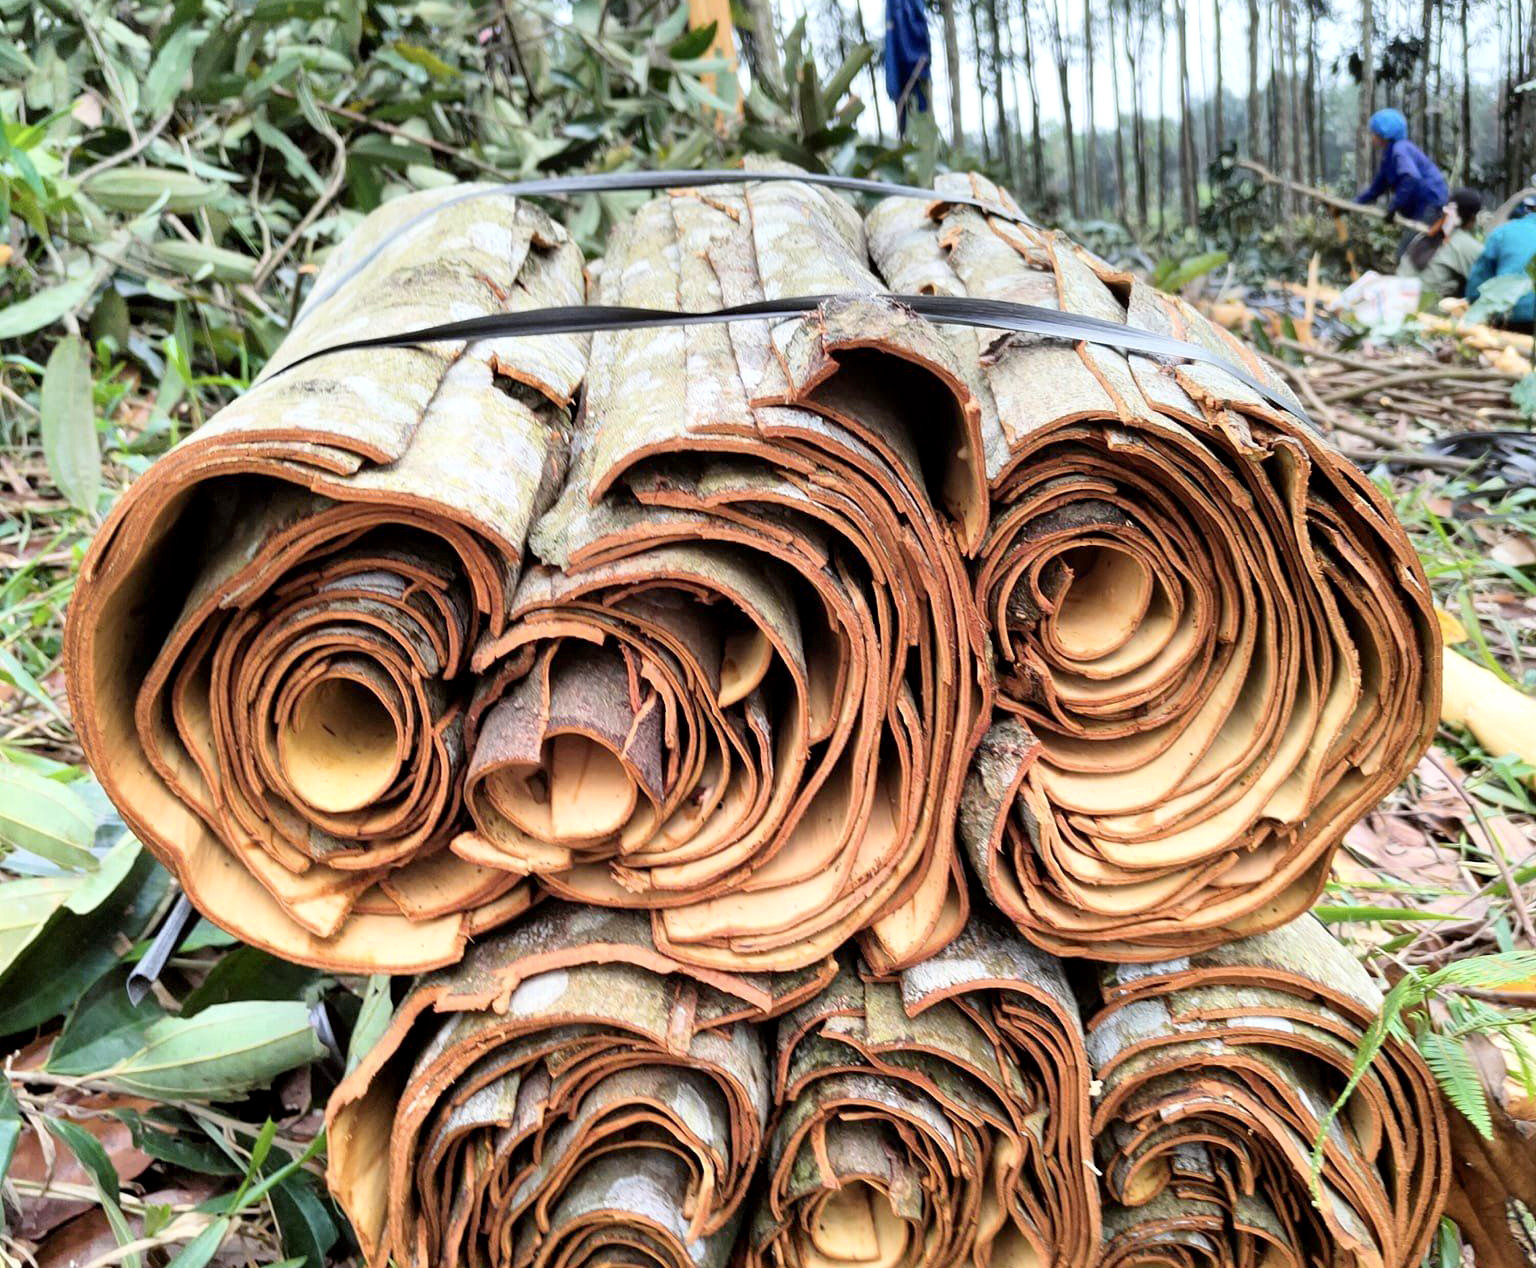 Newly harvested cinnamon bark in Yen Bai province. Photo: Son Trang.